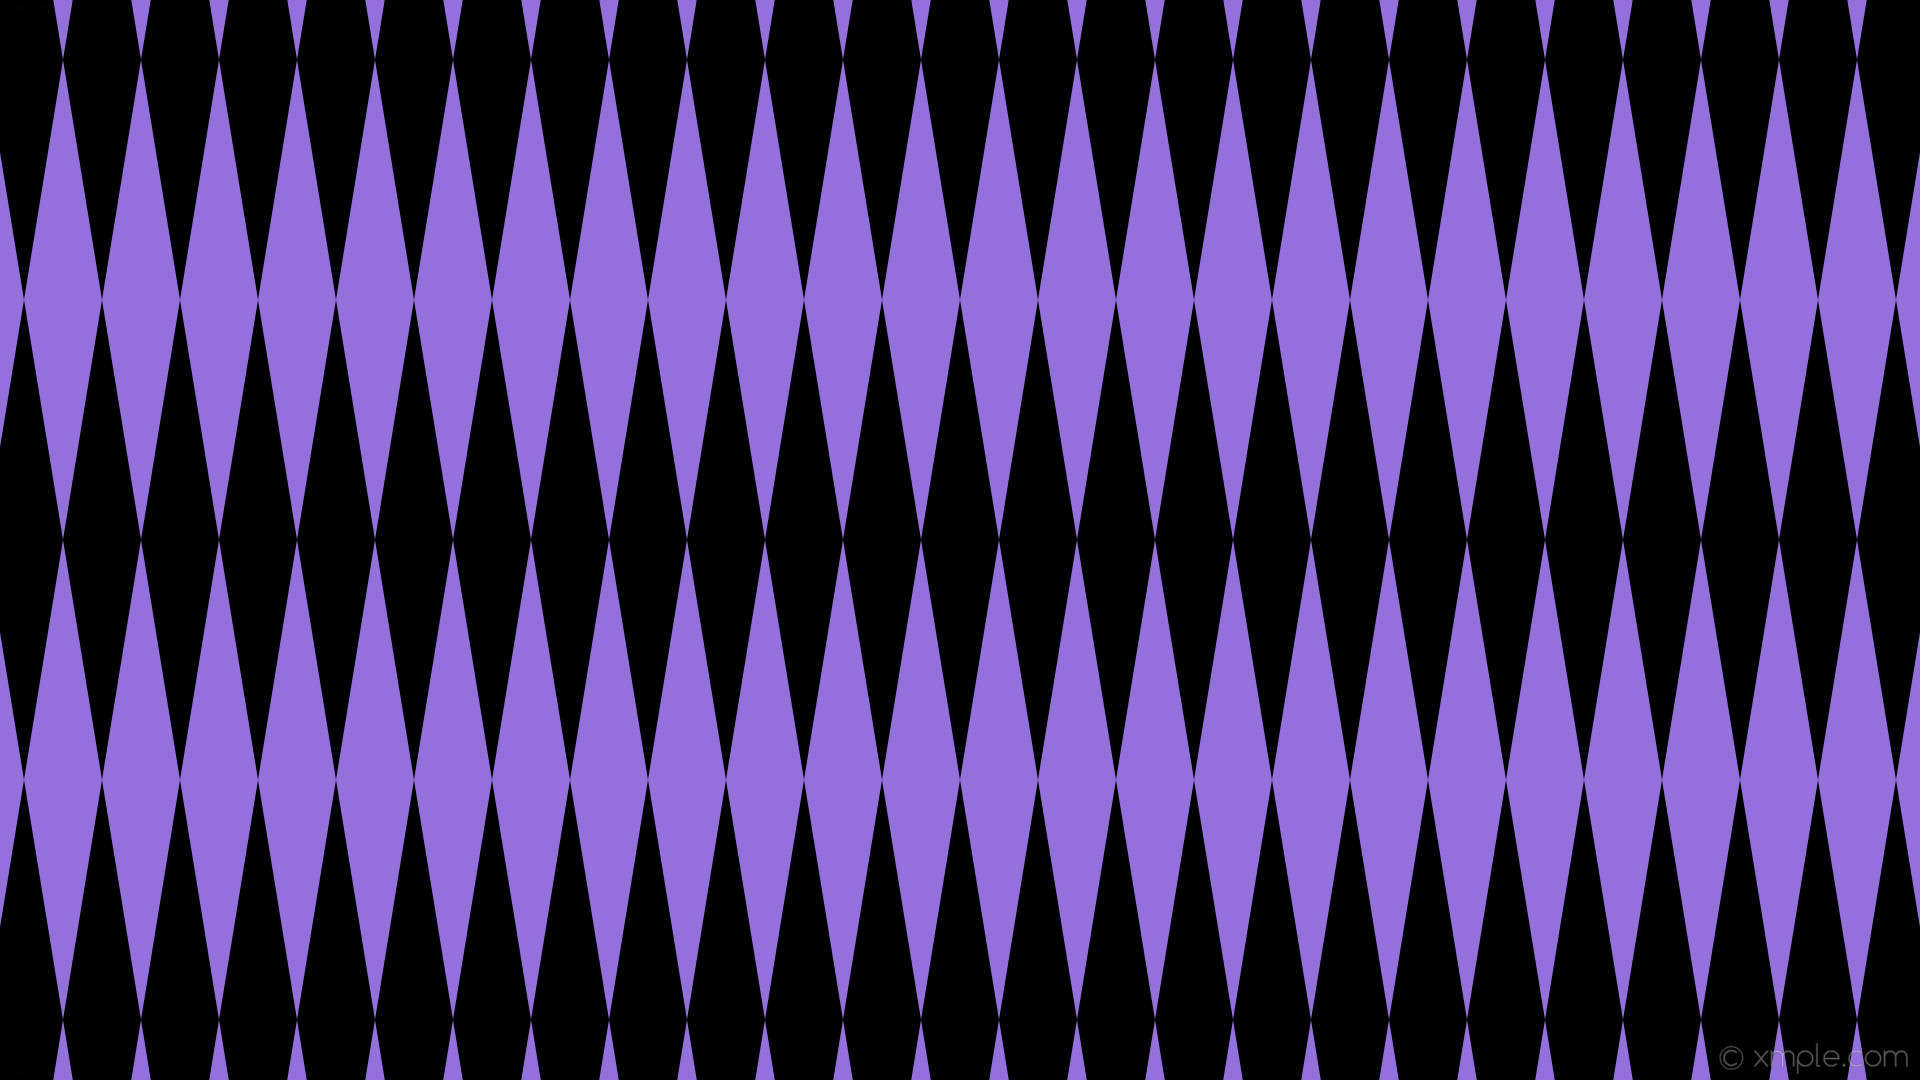 Wallpaper rhombus lozenge purple diamond black medium purple db 90 480px 78px